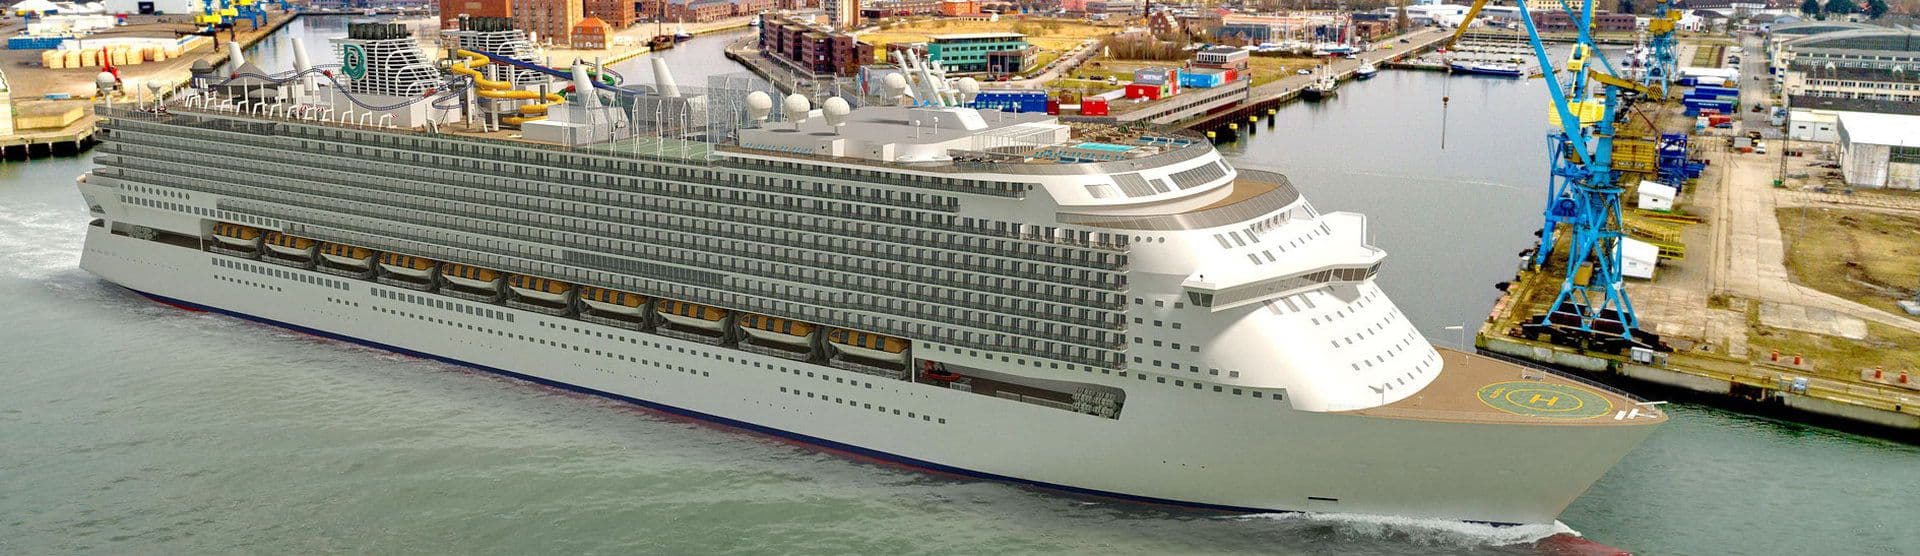 Disney Cruise Line приобретает недостроенный лайнер Global Dream